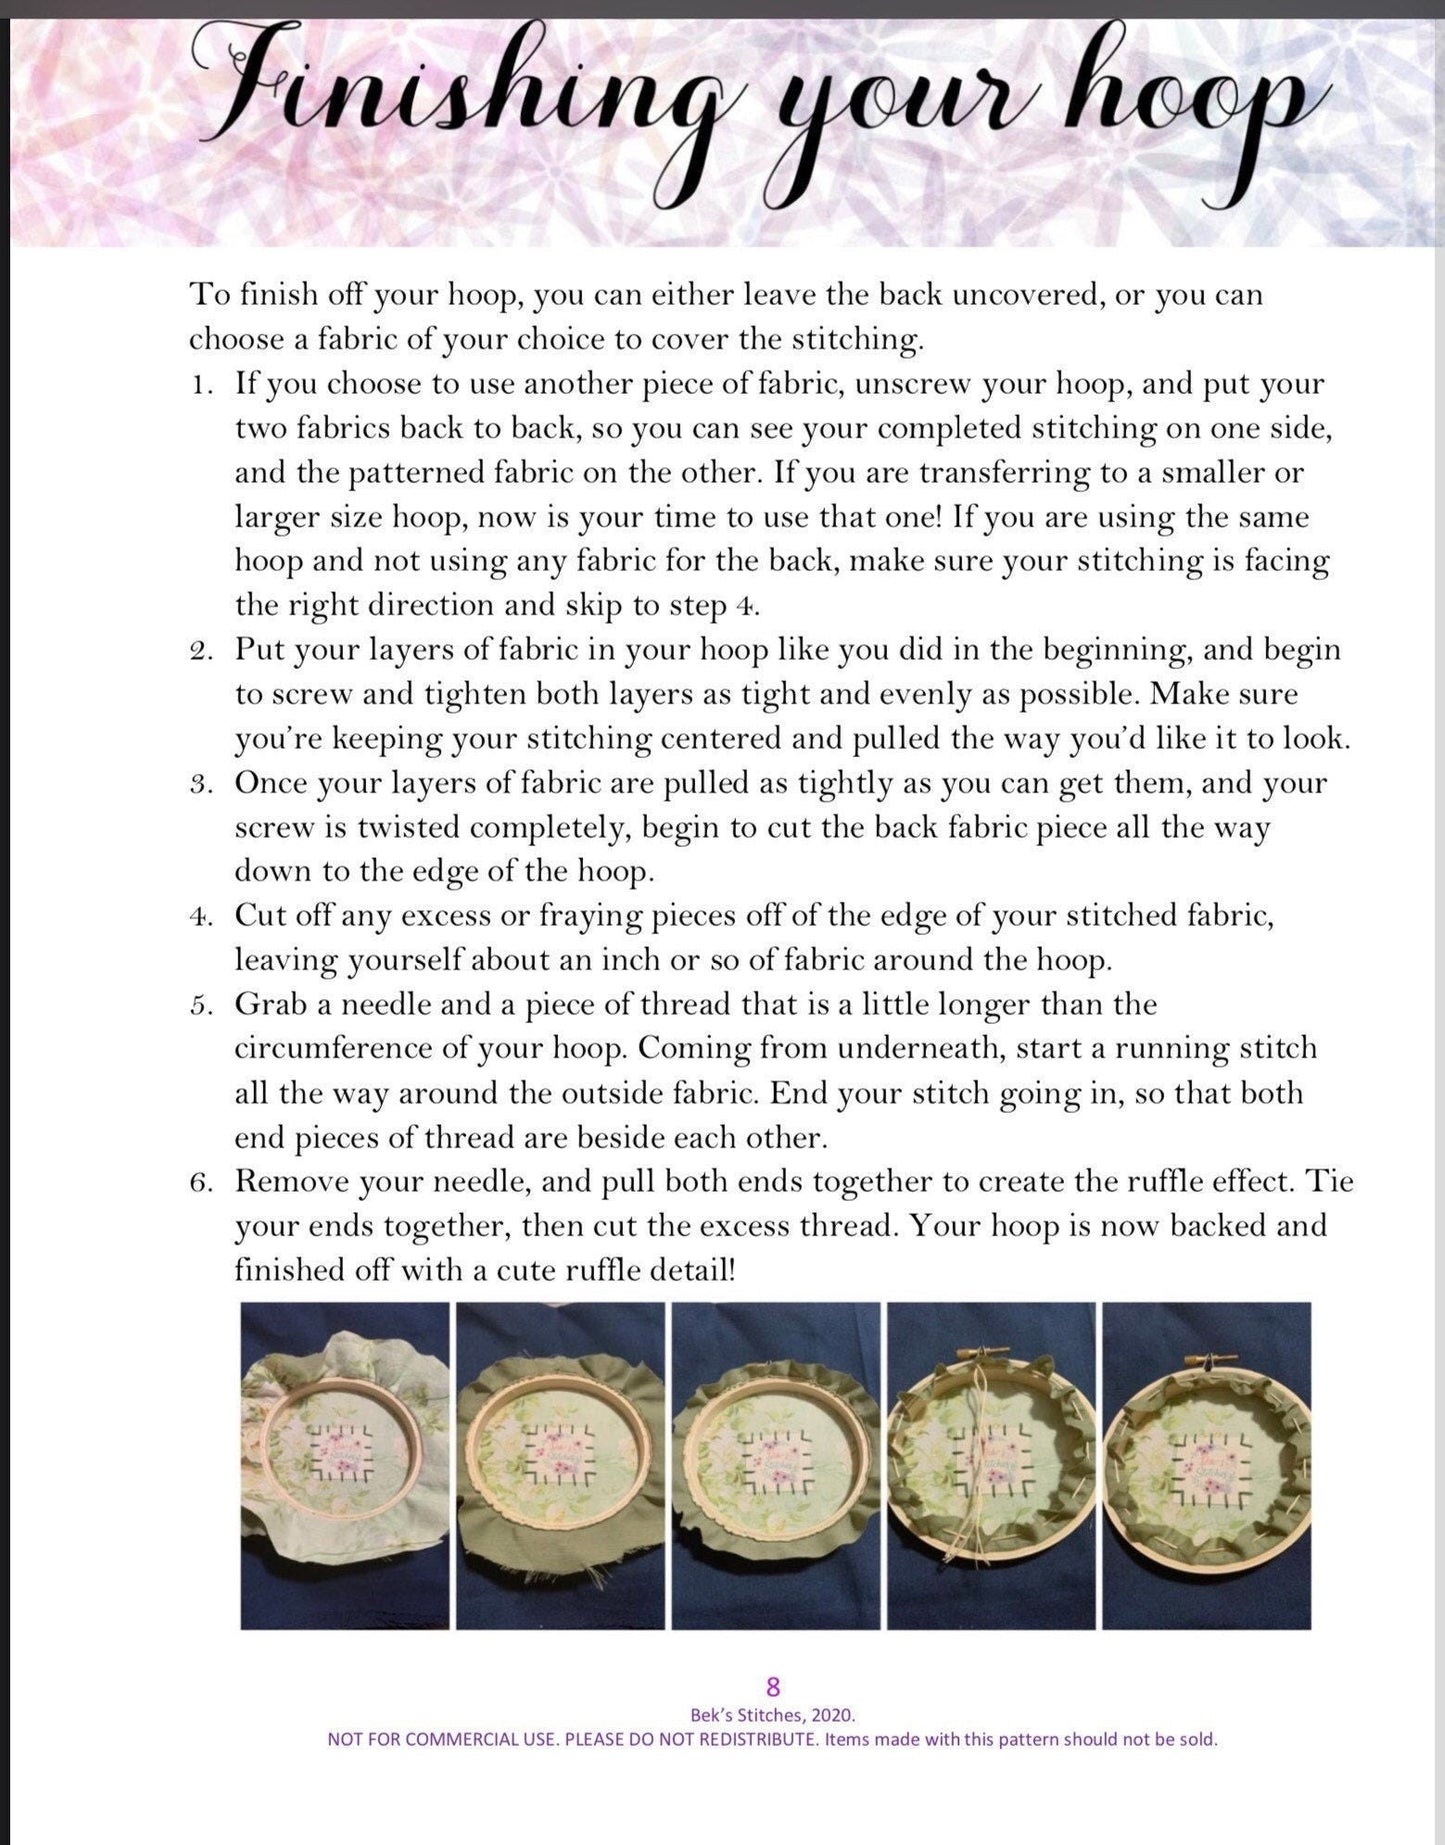 PDF Pattern - Fall & Florals, Intermediate/Advanced Embroidery Pattern